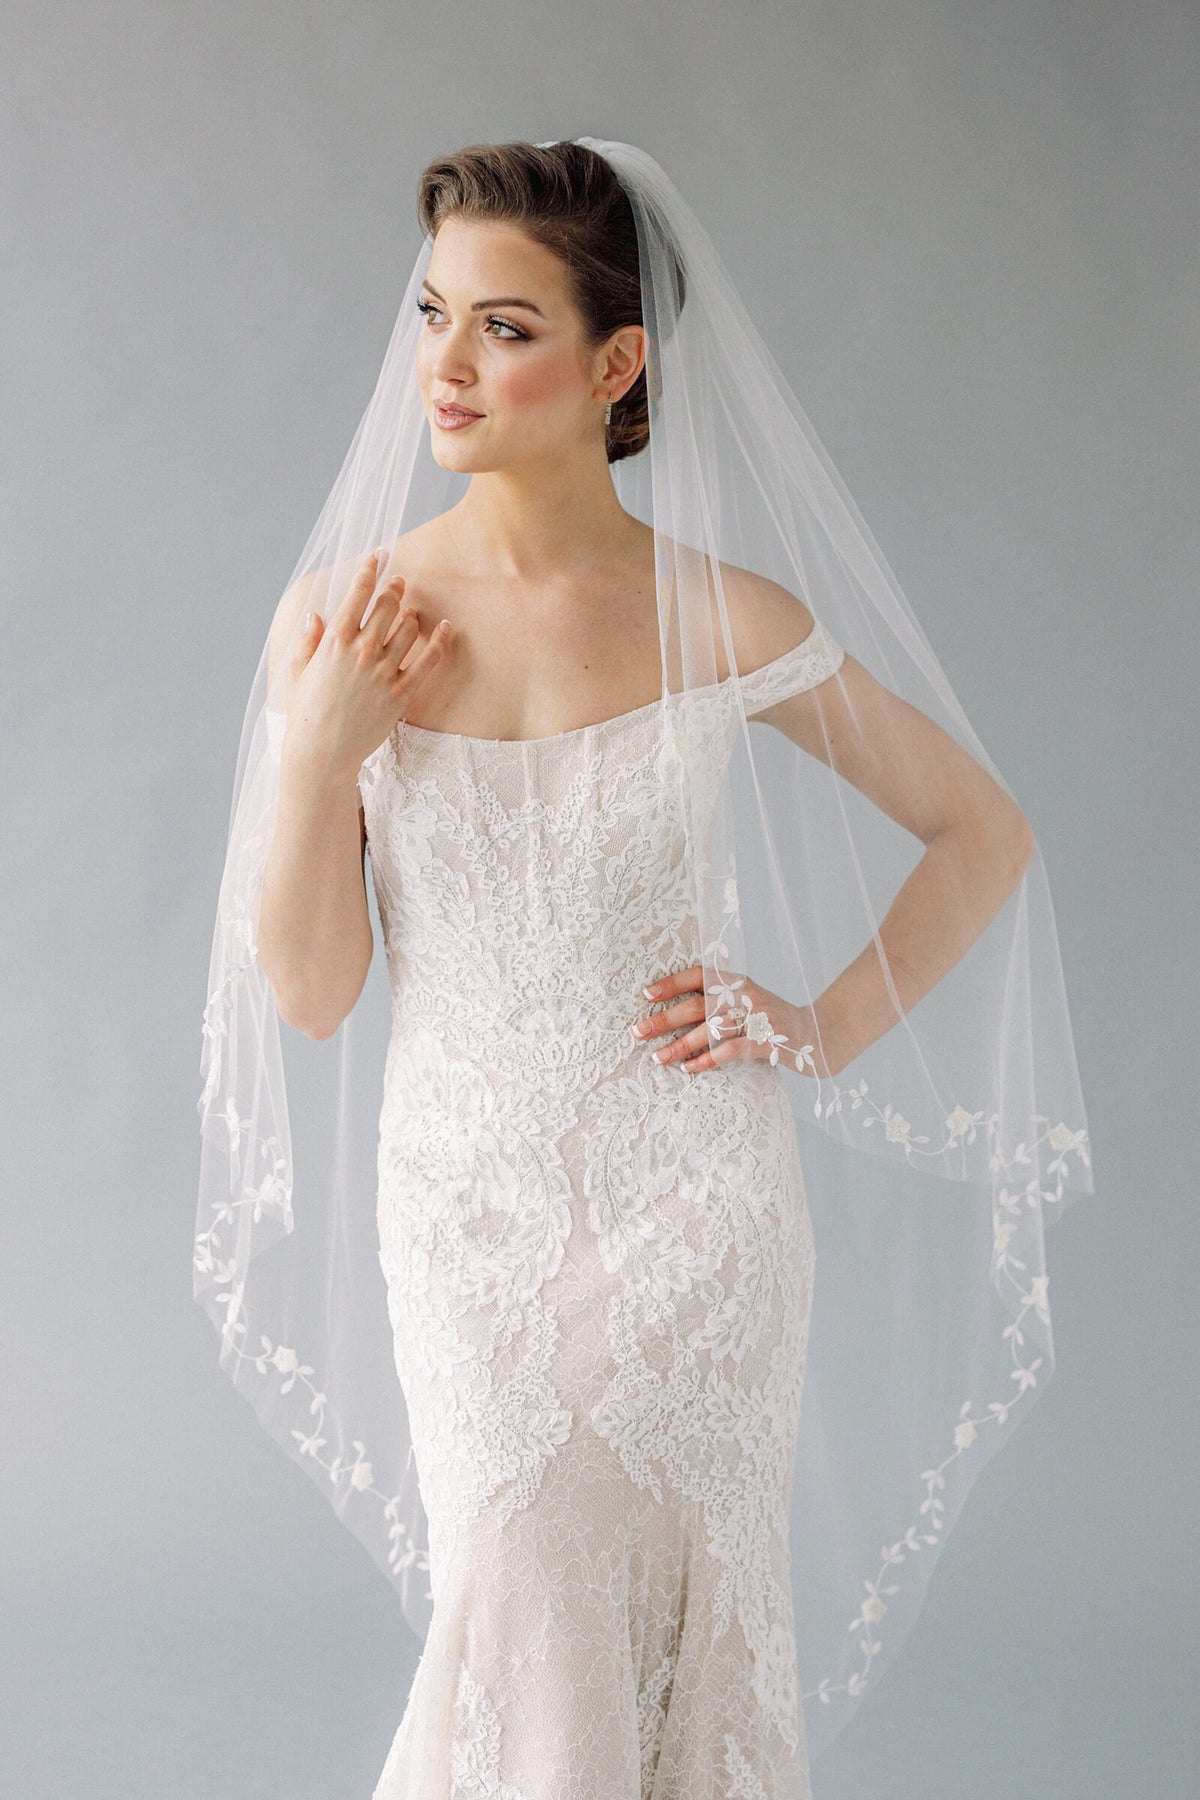 Bridal Veils Embroidered Vine Wedding Veil Waltz Length Lace Edge Sparkle